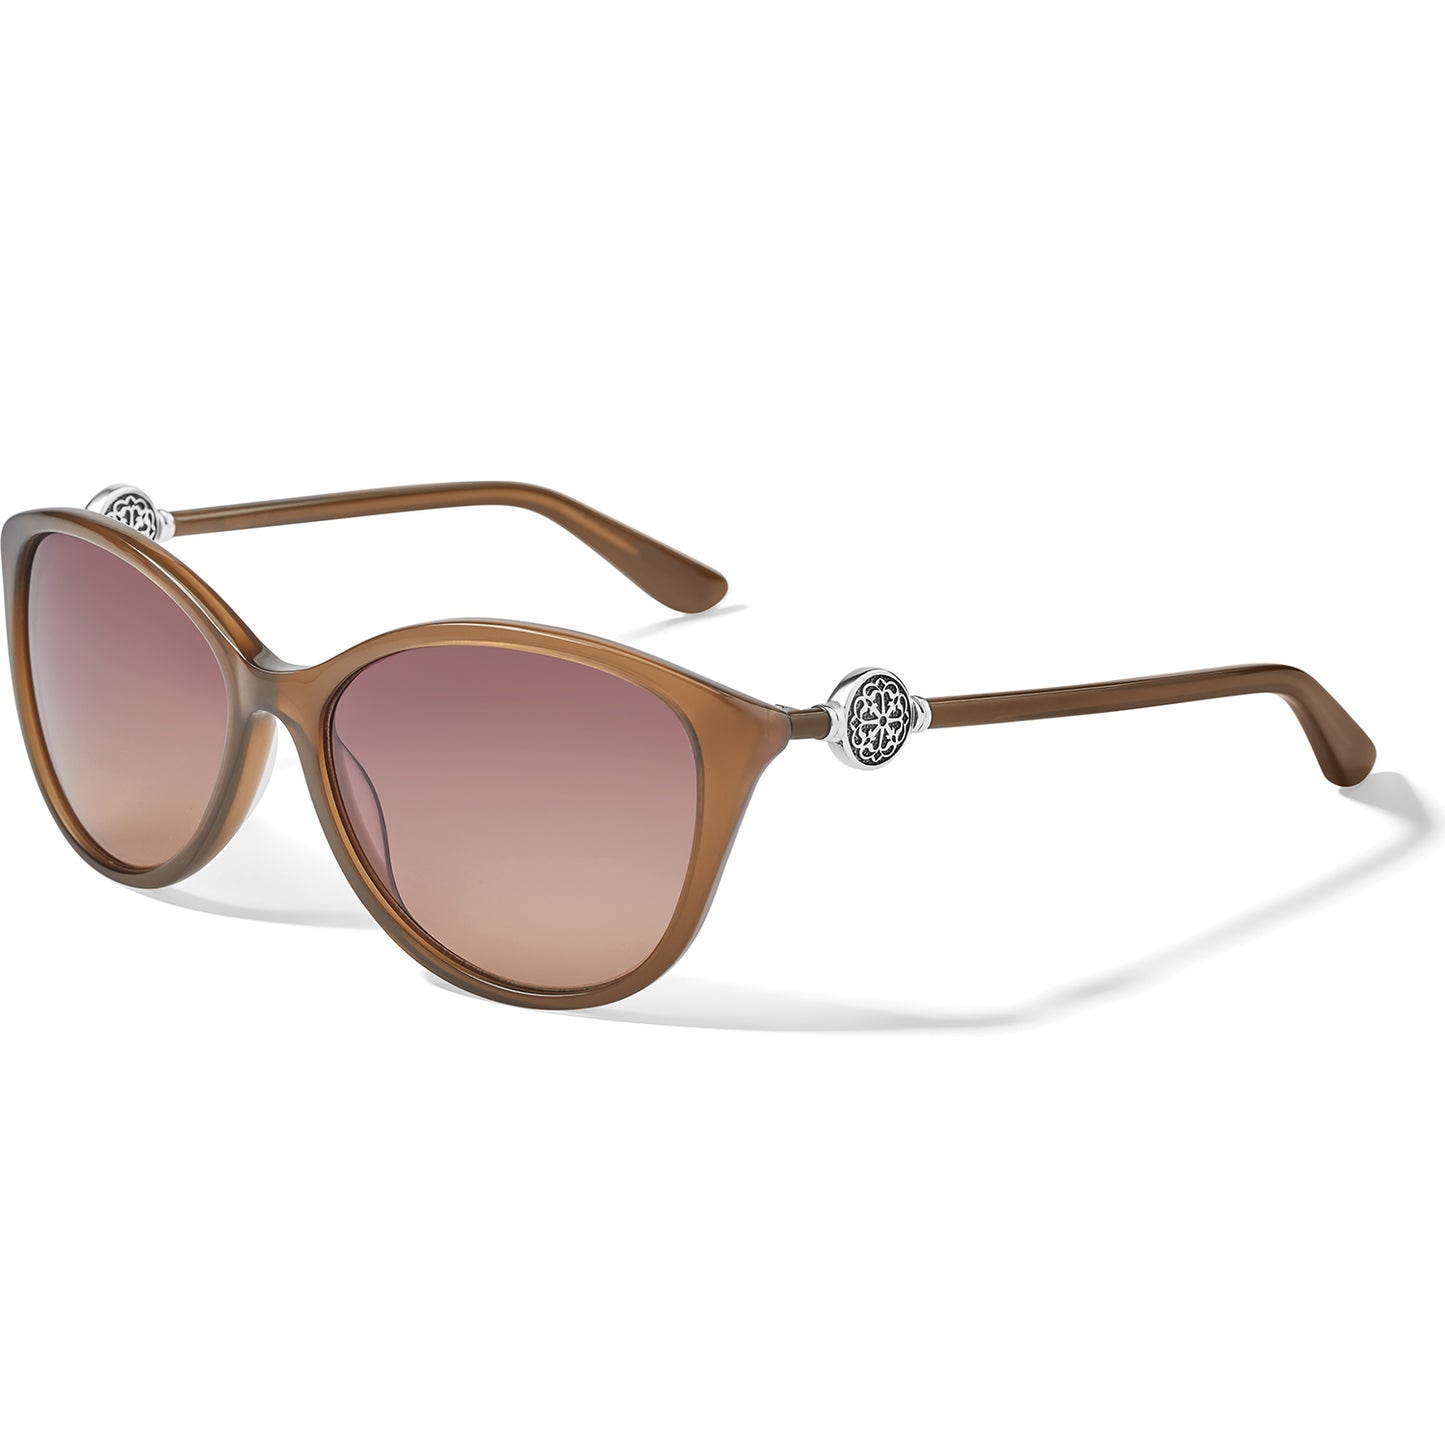 Ferrara Sunglasses, Brown